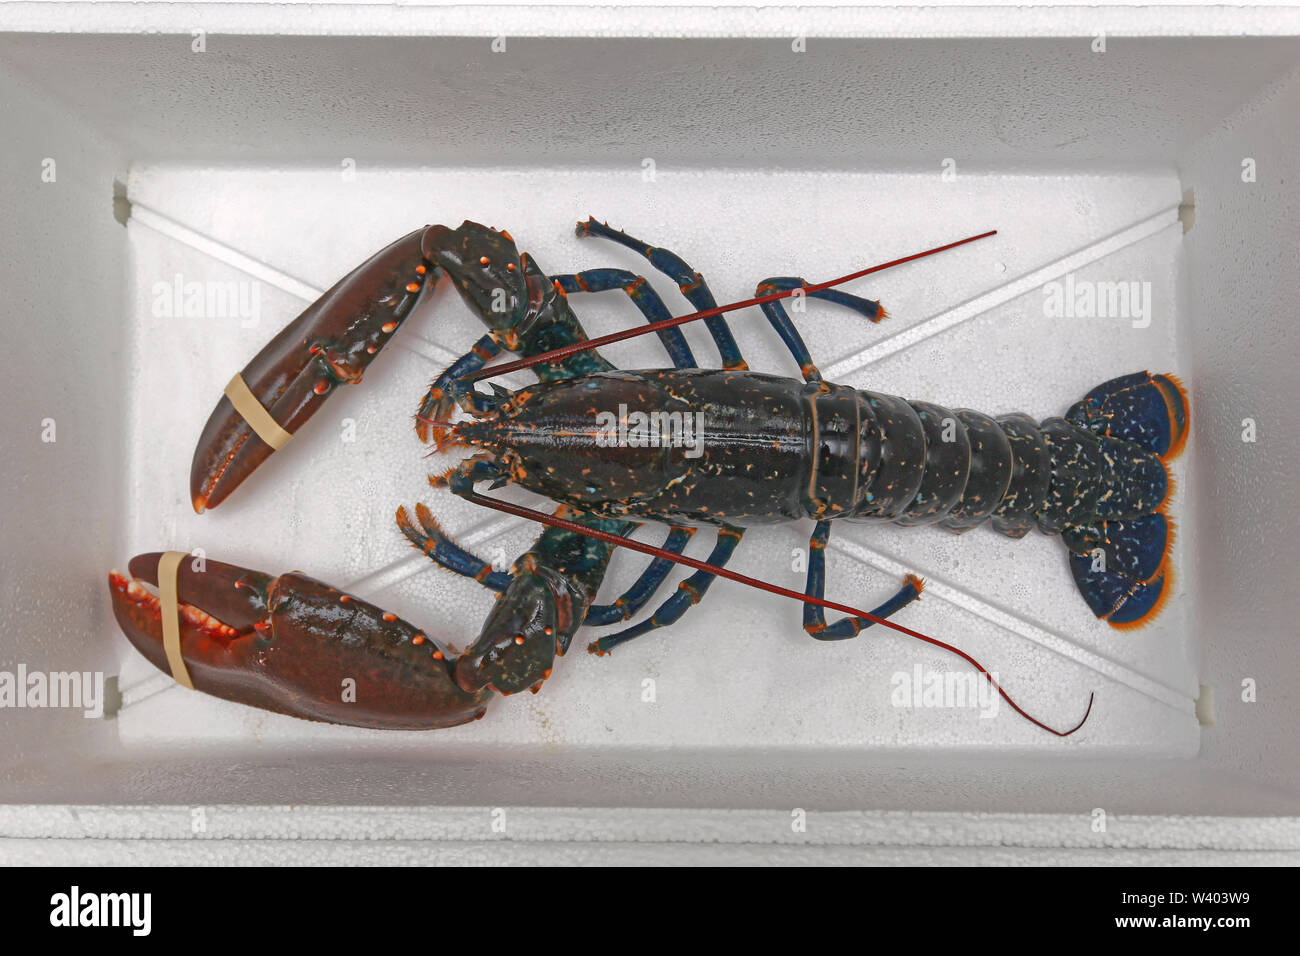 Big Live Lobster Crustacean in Cooler Box Stock Photo - Alamy